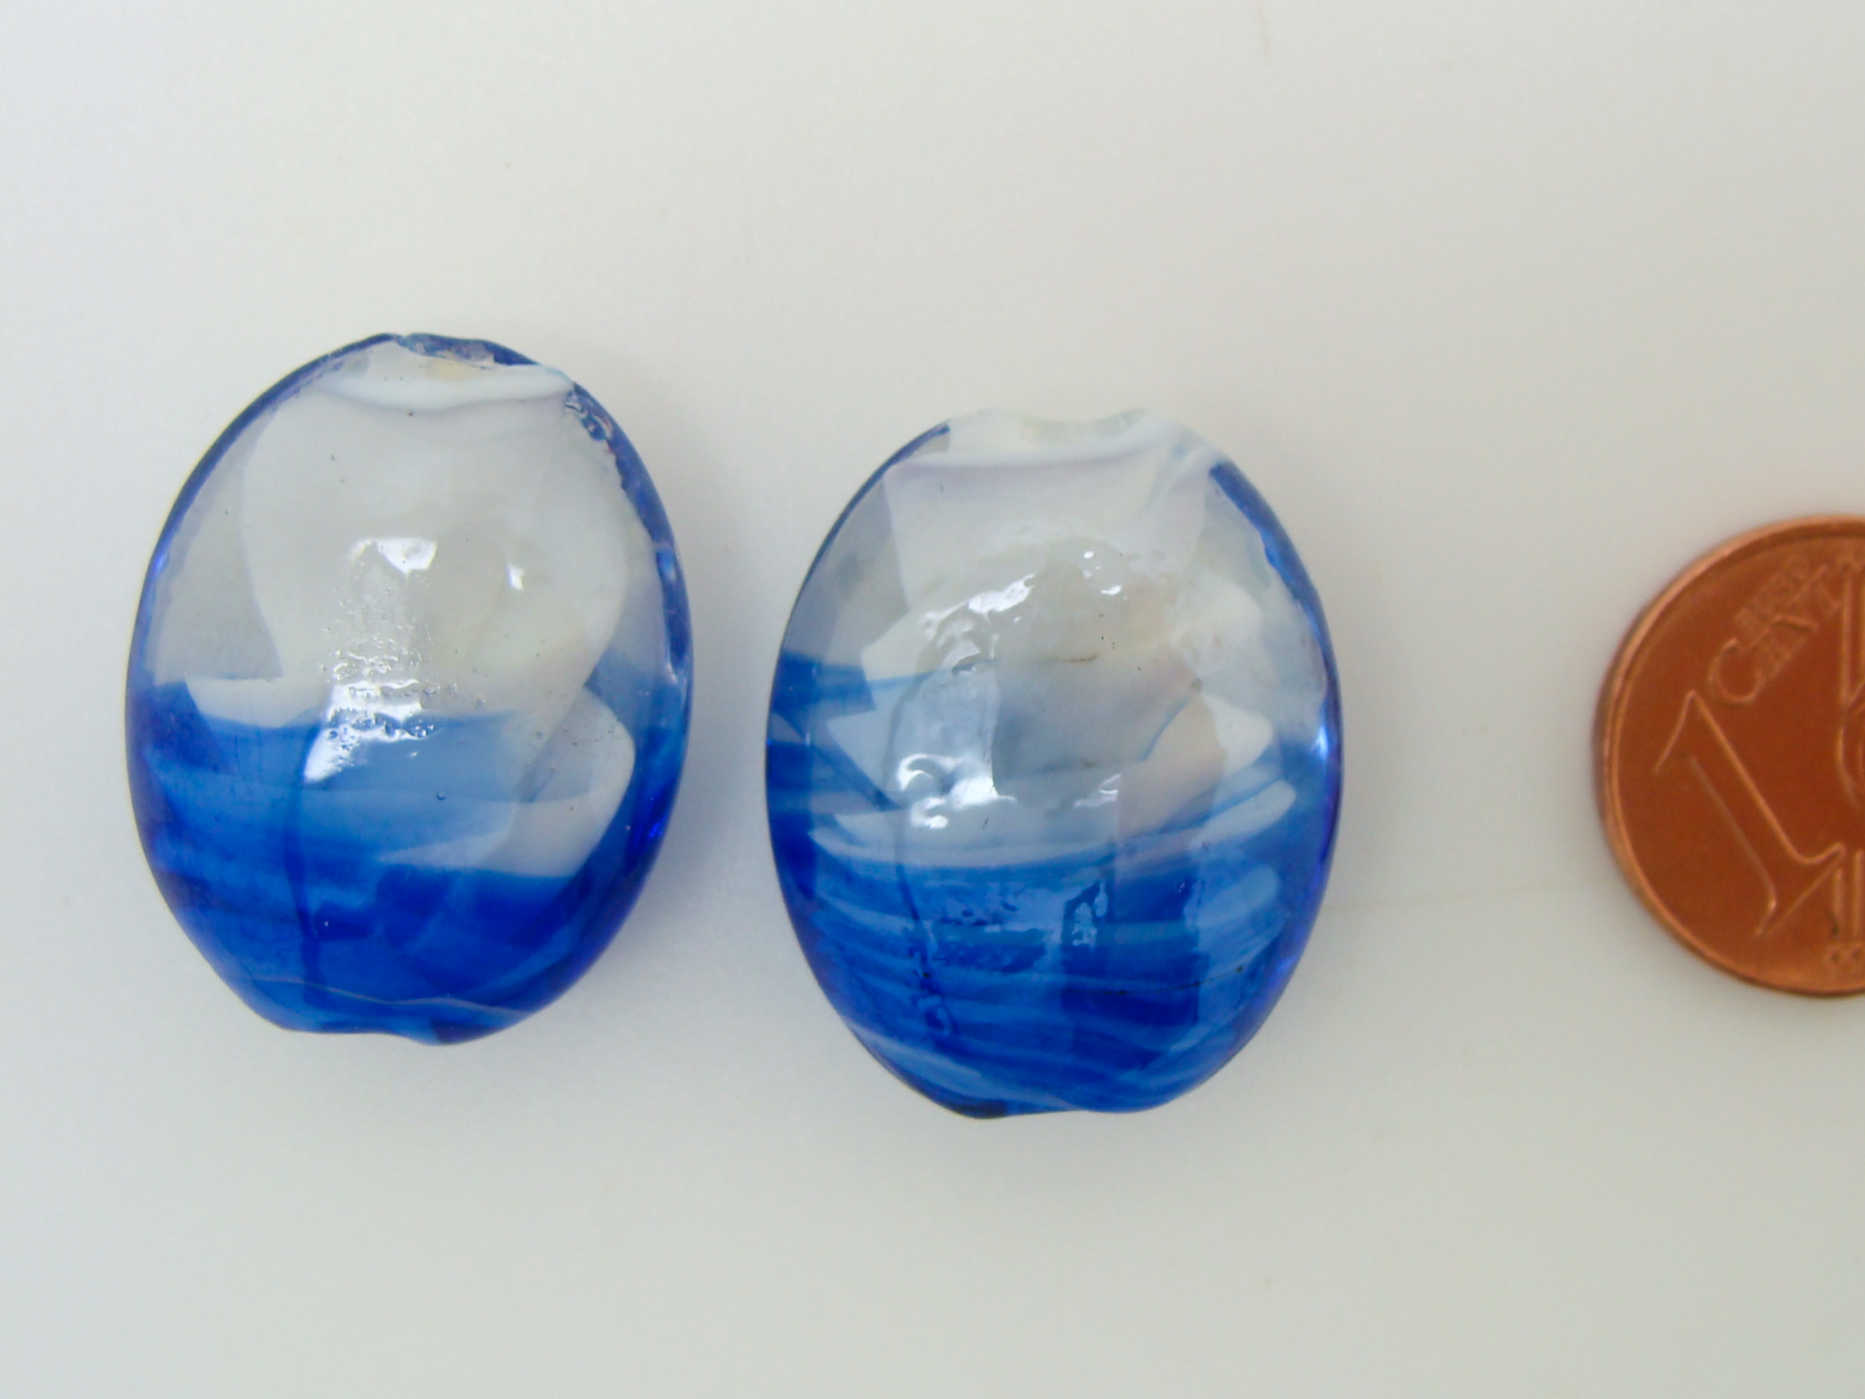 PV31 perle ovale 21mm bleu fonce volute blanc verre